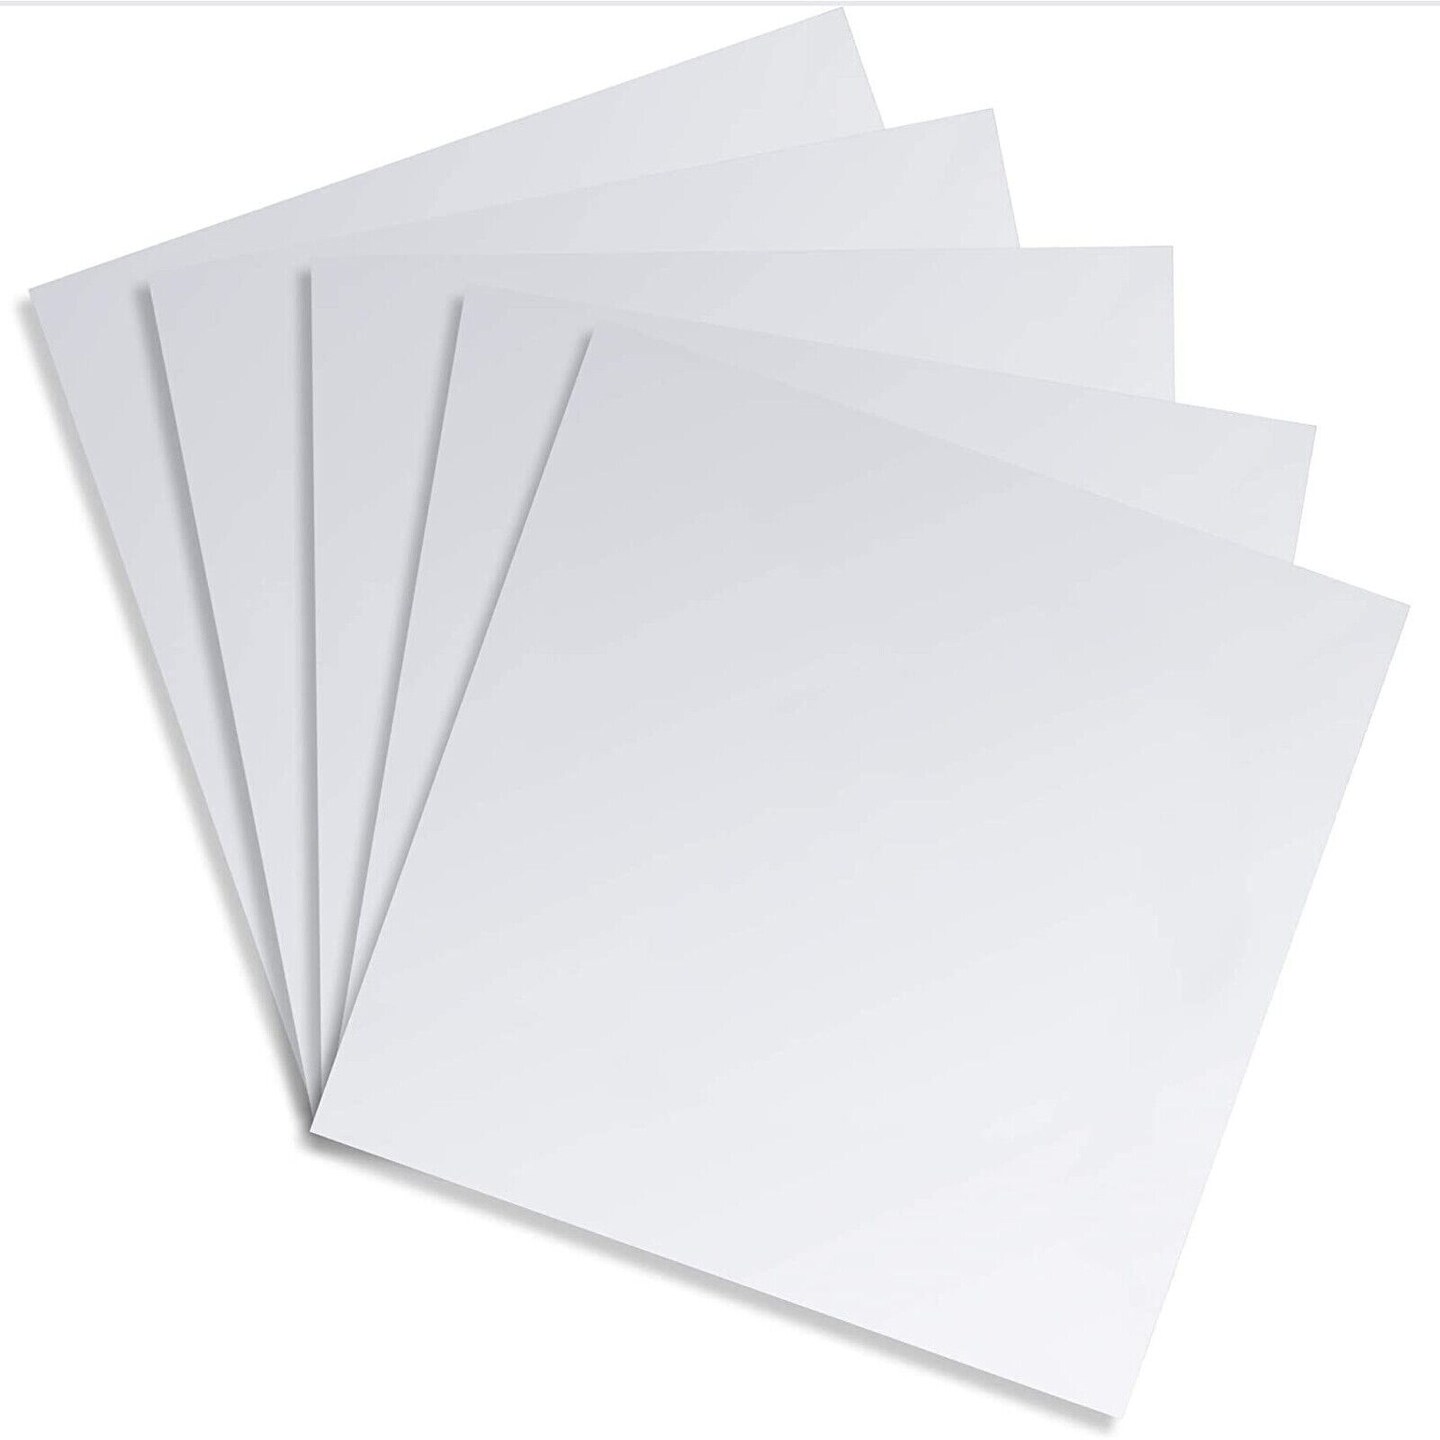 12 x 12 Acrylic Flexible Mirror Sheets, 12 Pack Self Adhesive Mirror Tiles